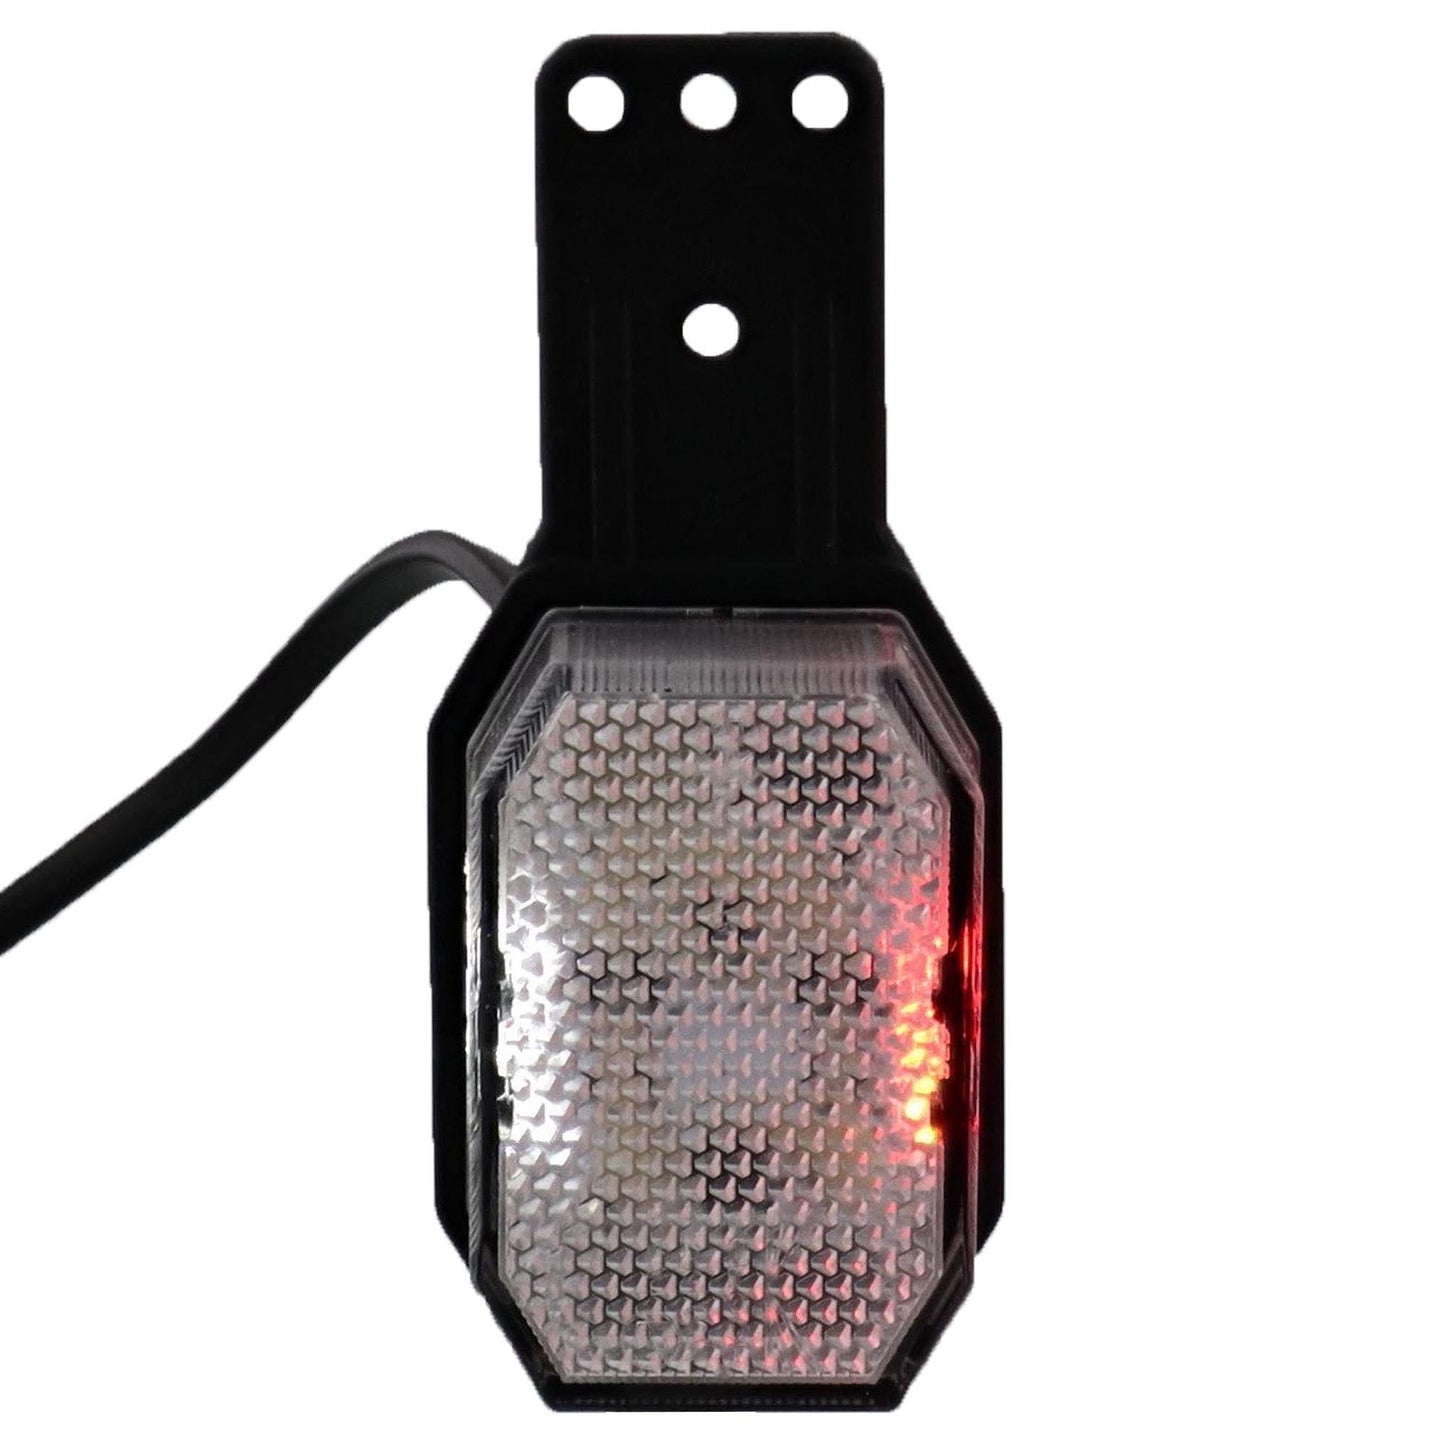 Flexipoint LED Umrissleuchte rot/weiss DC 0,5m Kabel links - TMN-shop.de